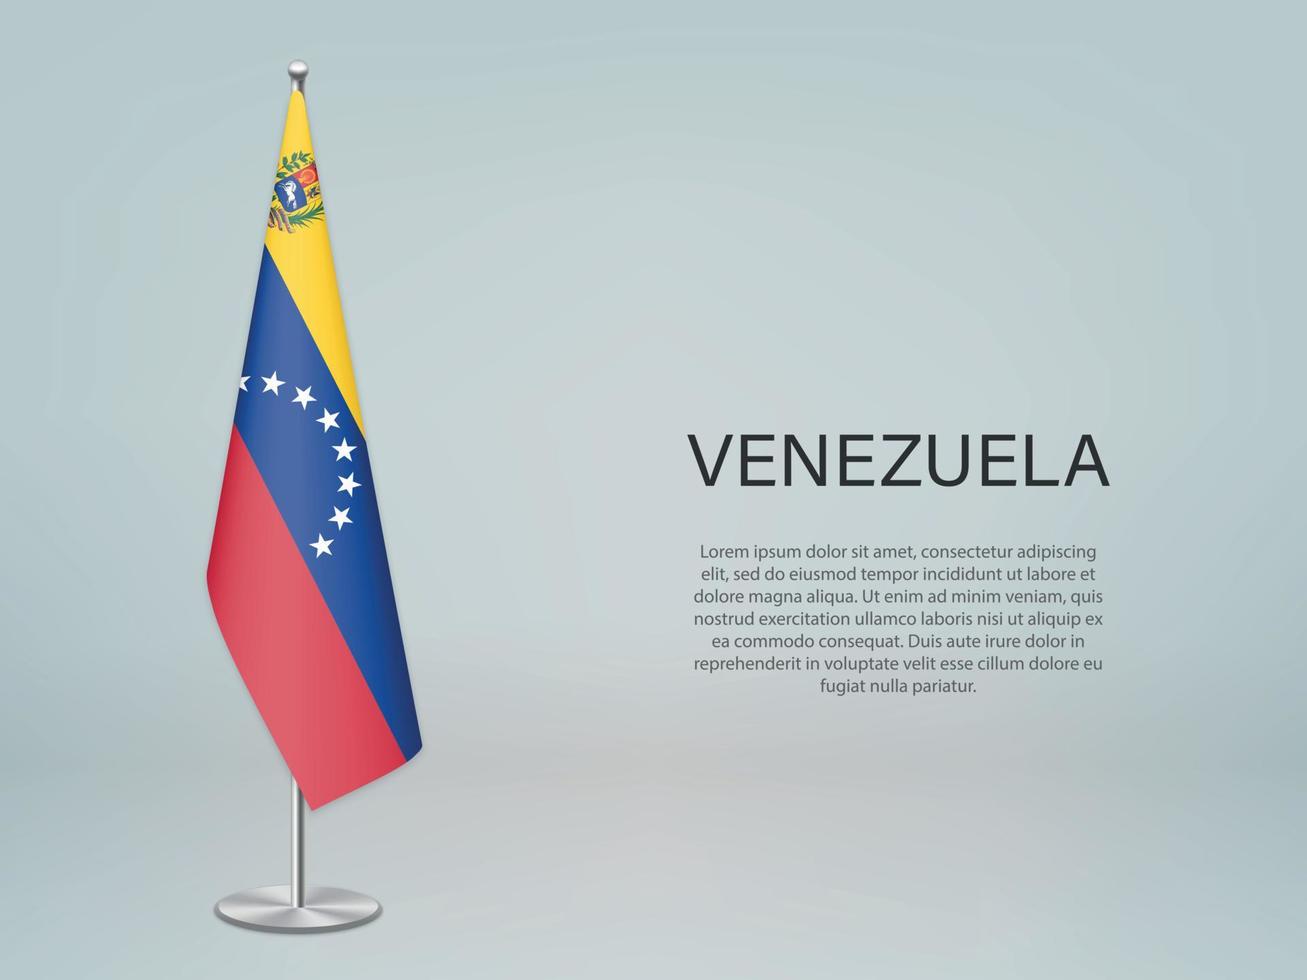 venezuela pendurada bandeira no stand. modelo de banner de conferência vetor